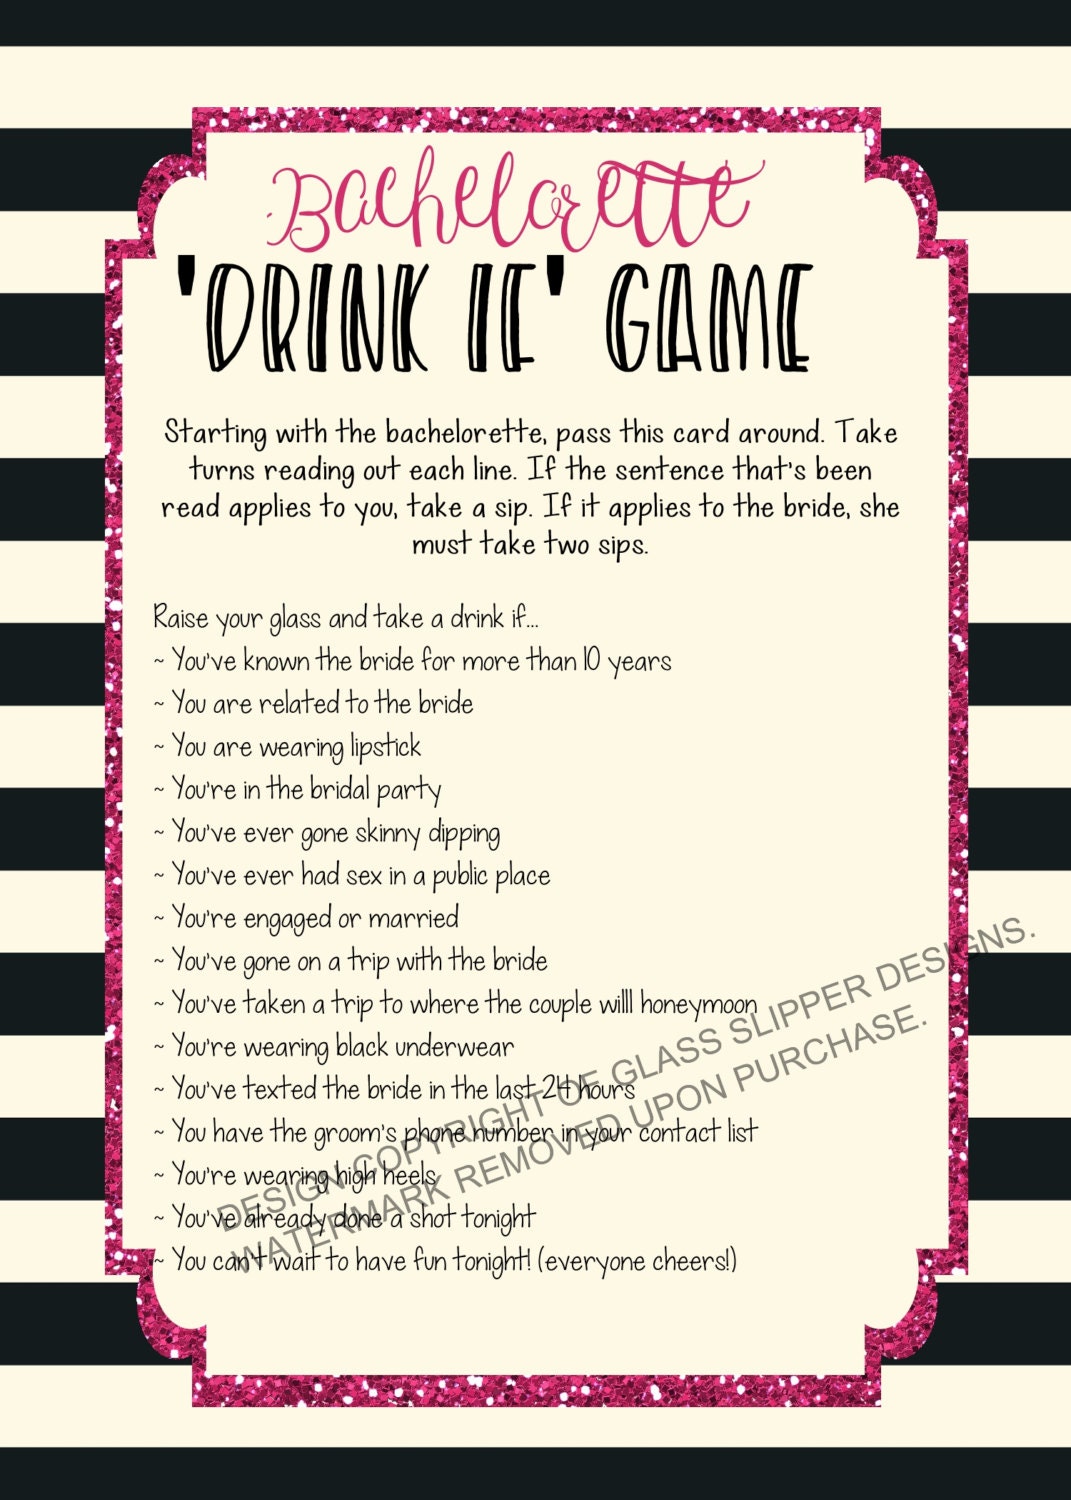 printable bachelorette game bachelorette drinking game